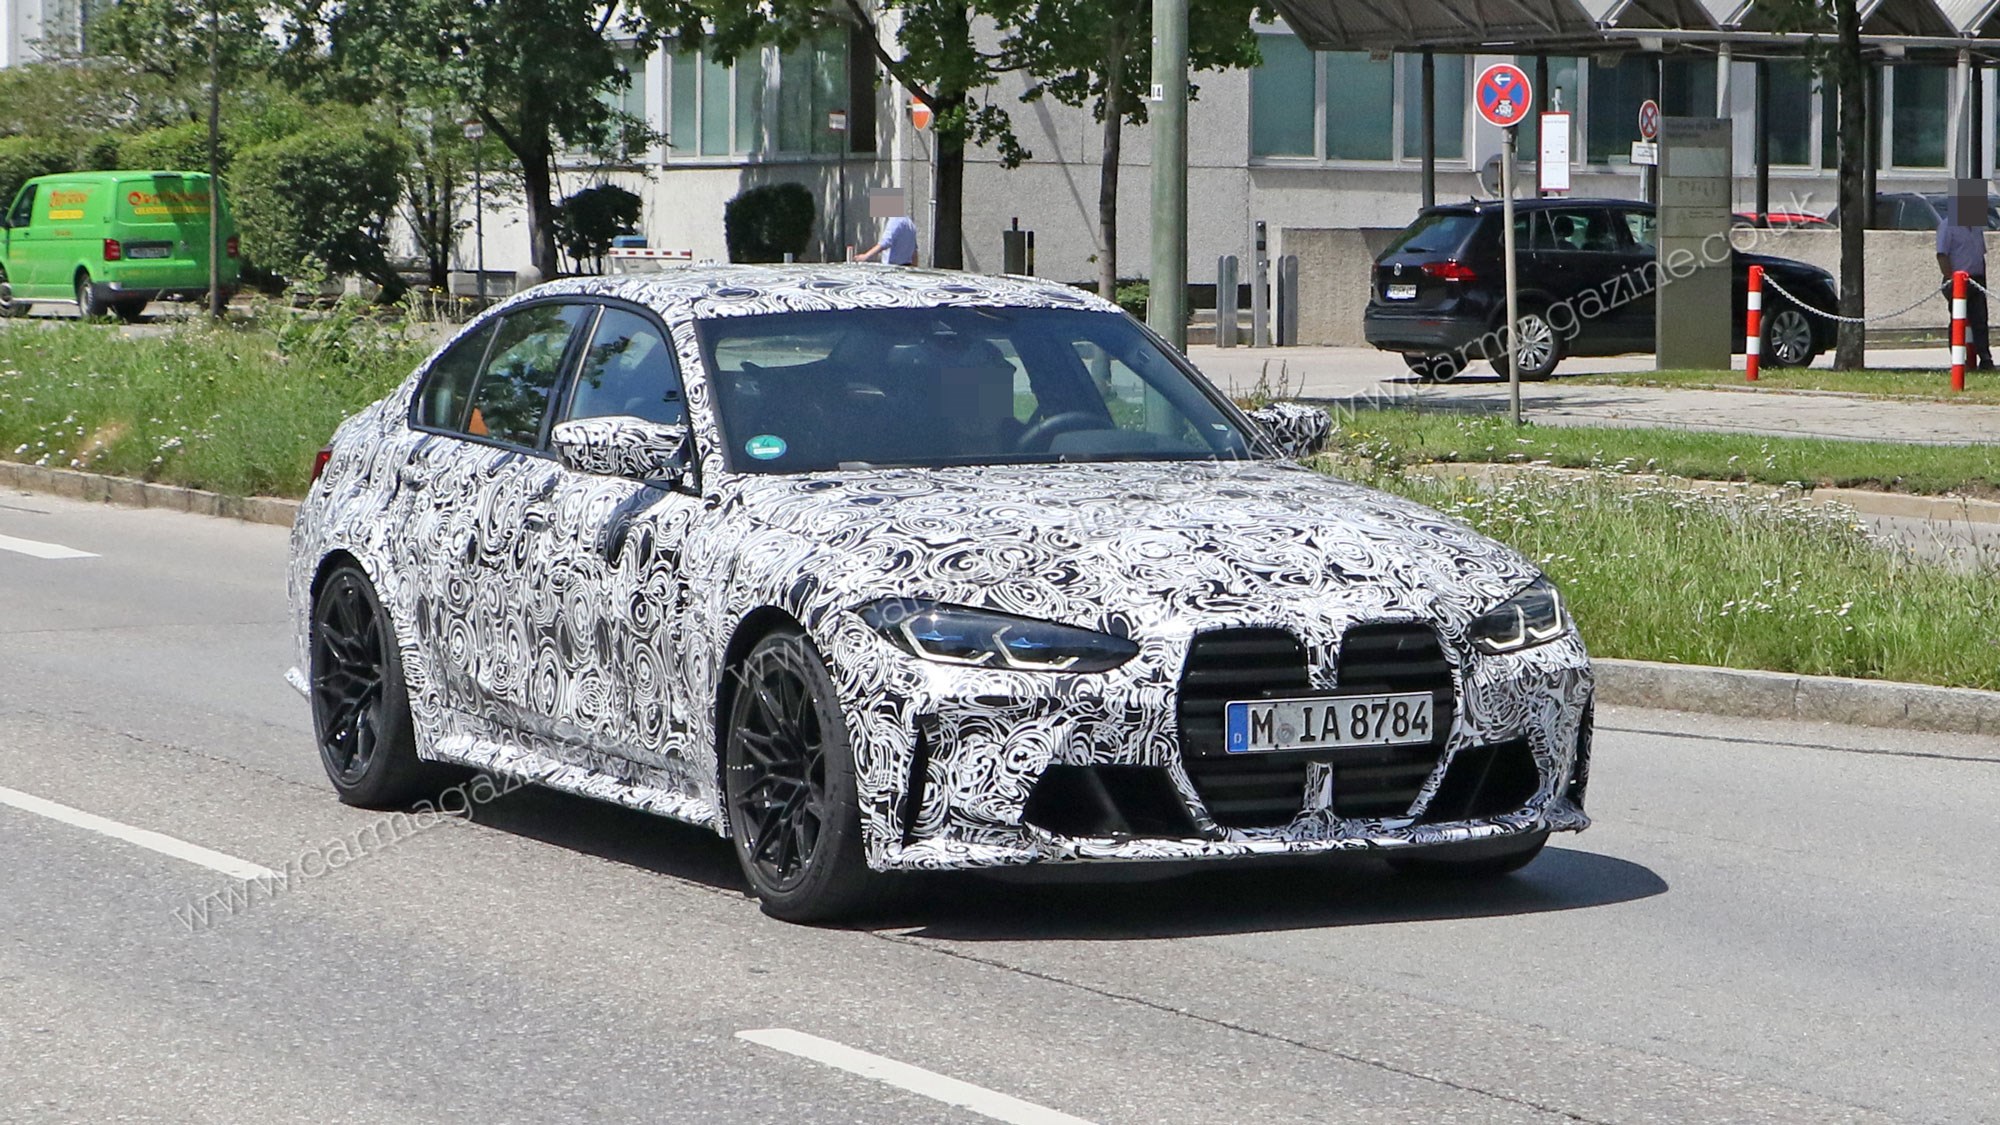 New 2020 BMW M3 (G80) news, specs, prices | CAR Magazine